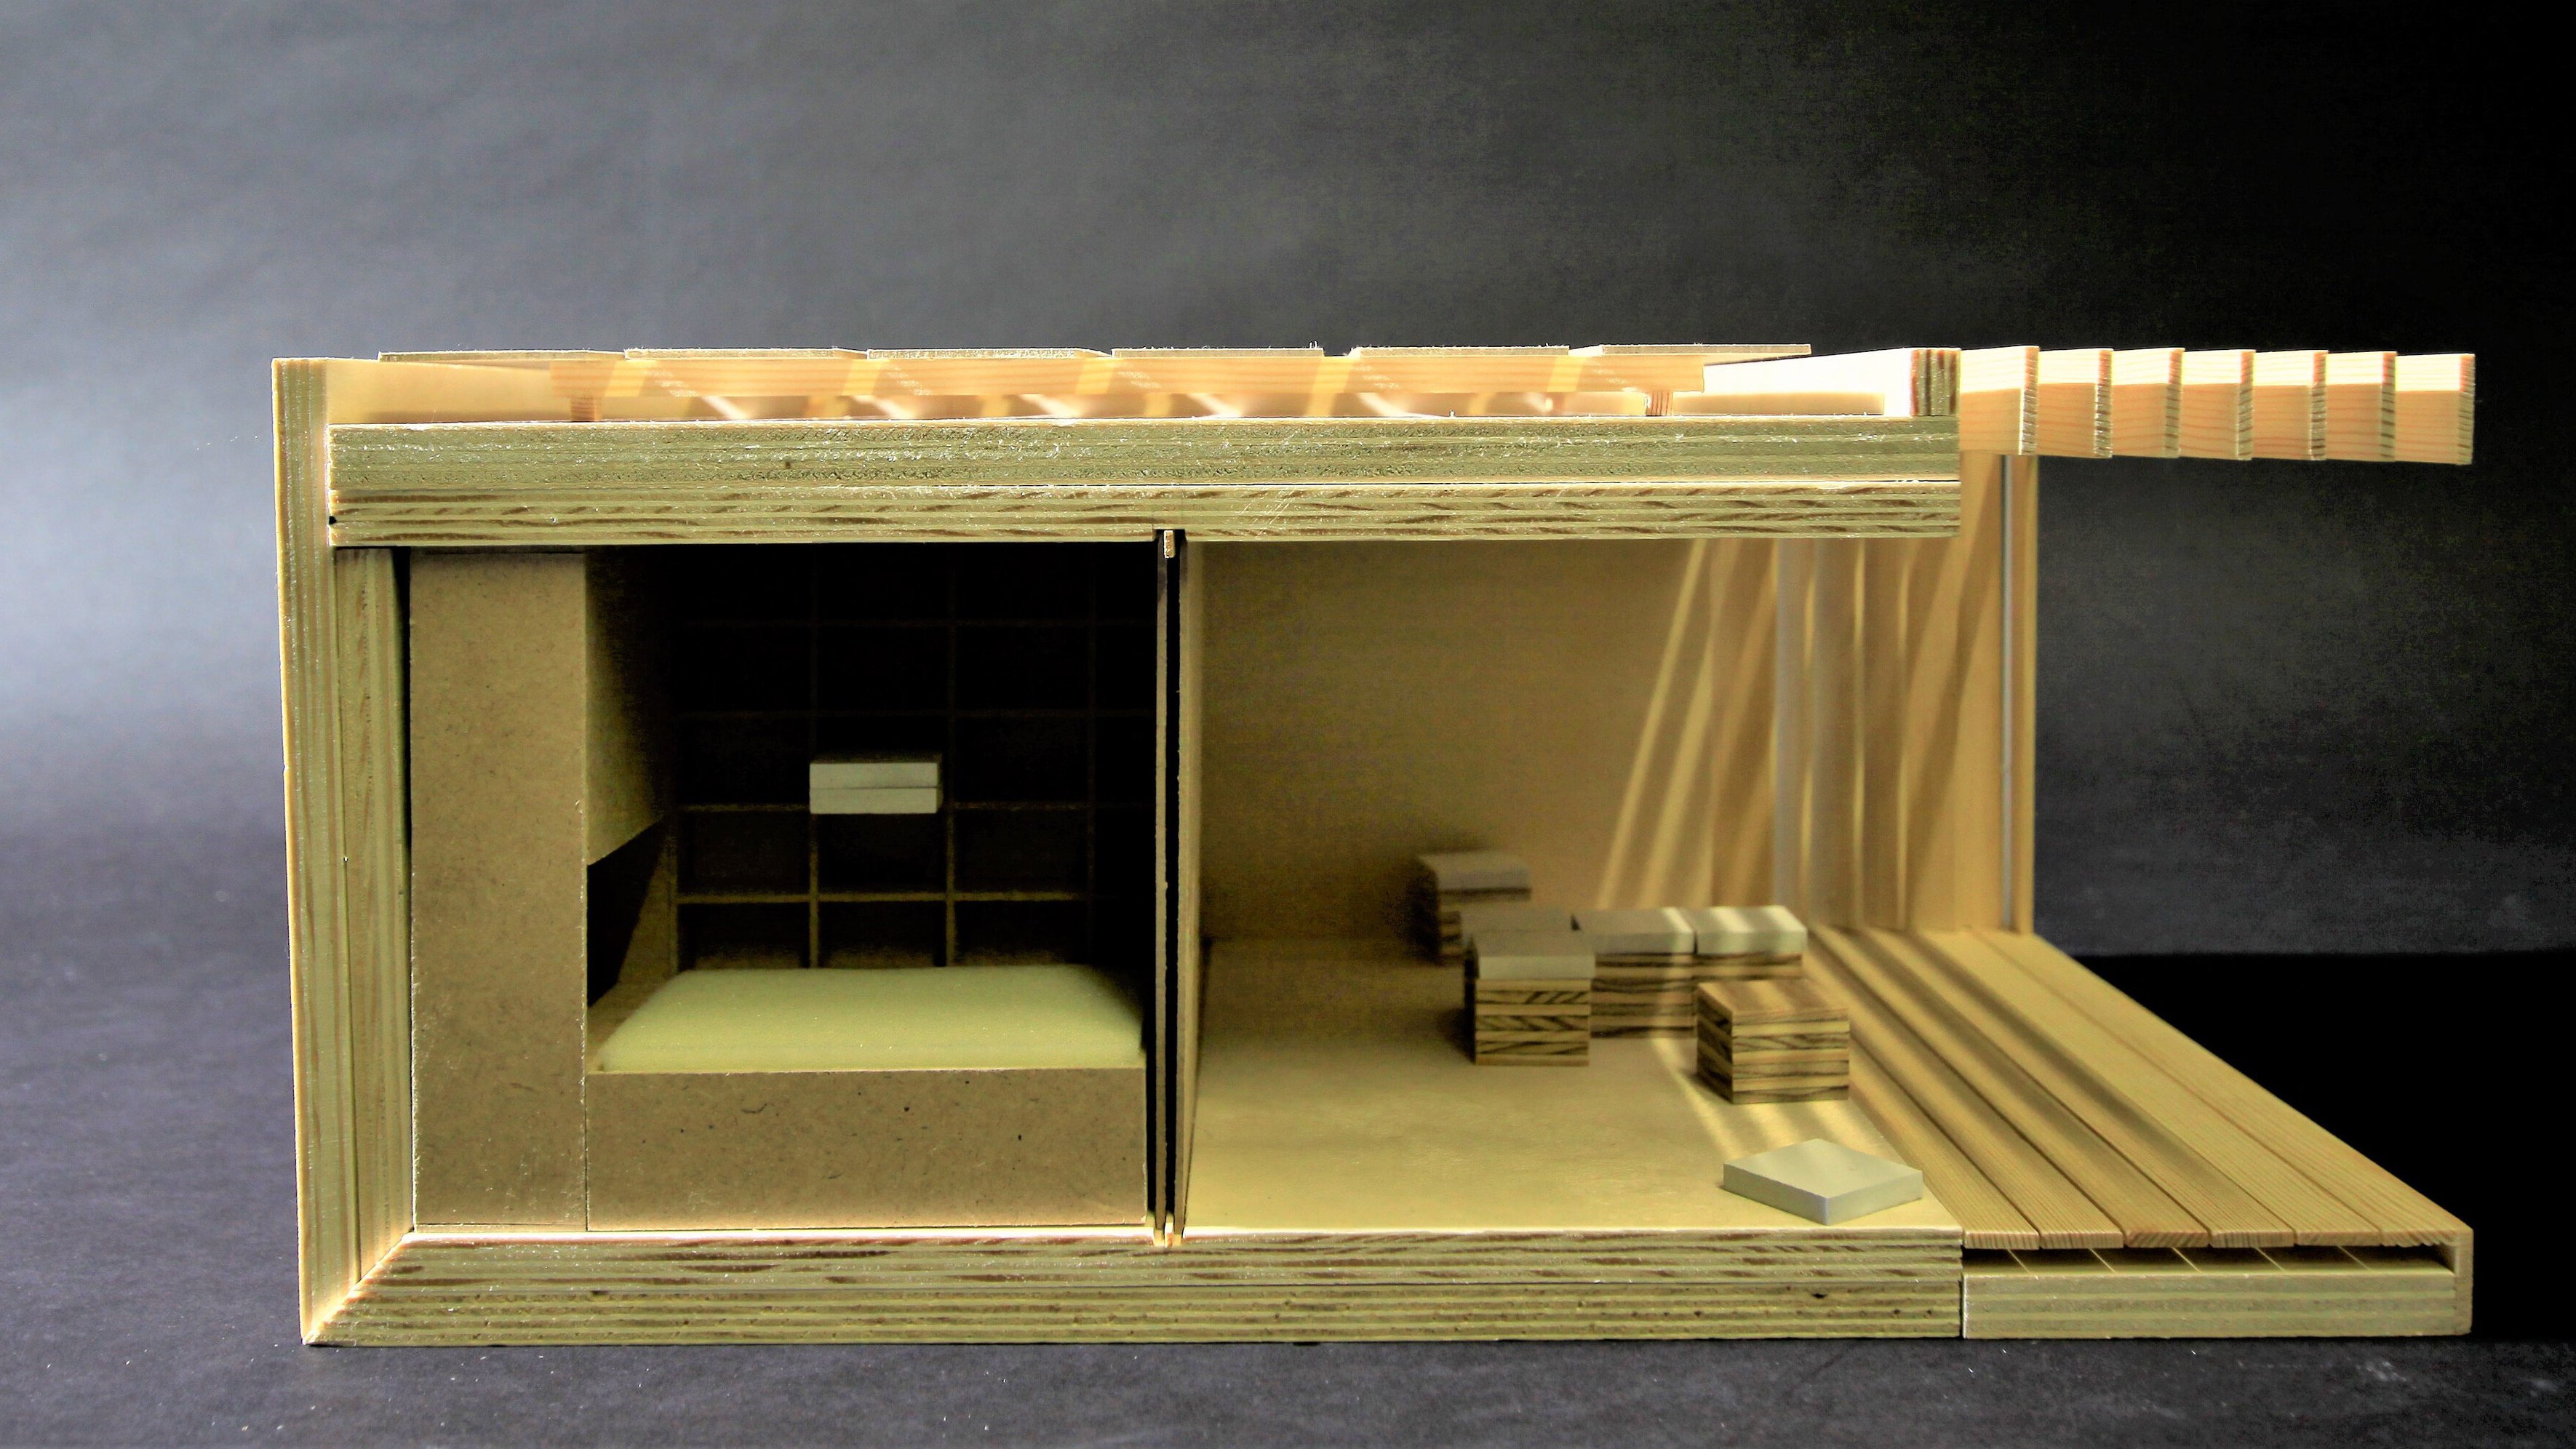 Modell eines Holzbauprojektes